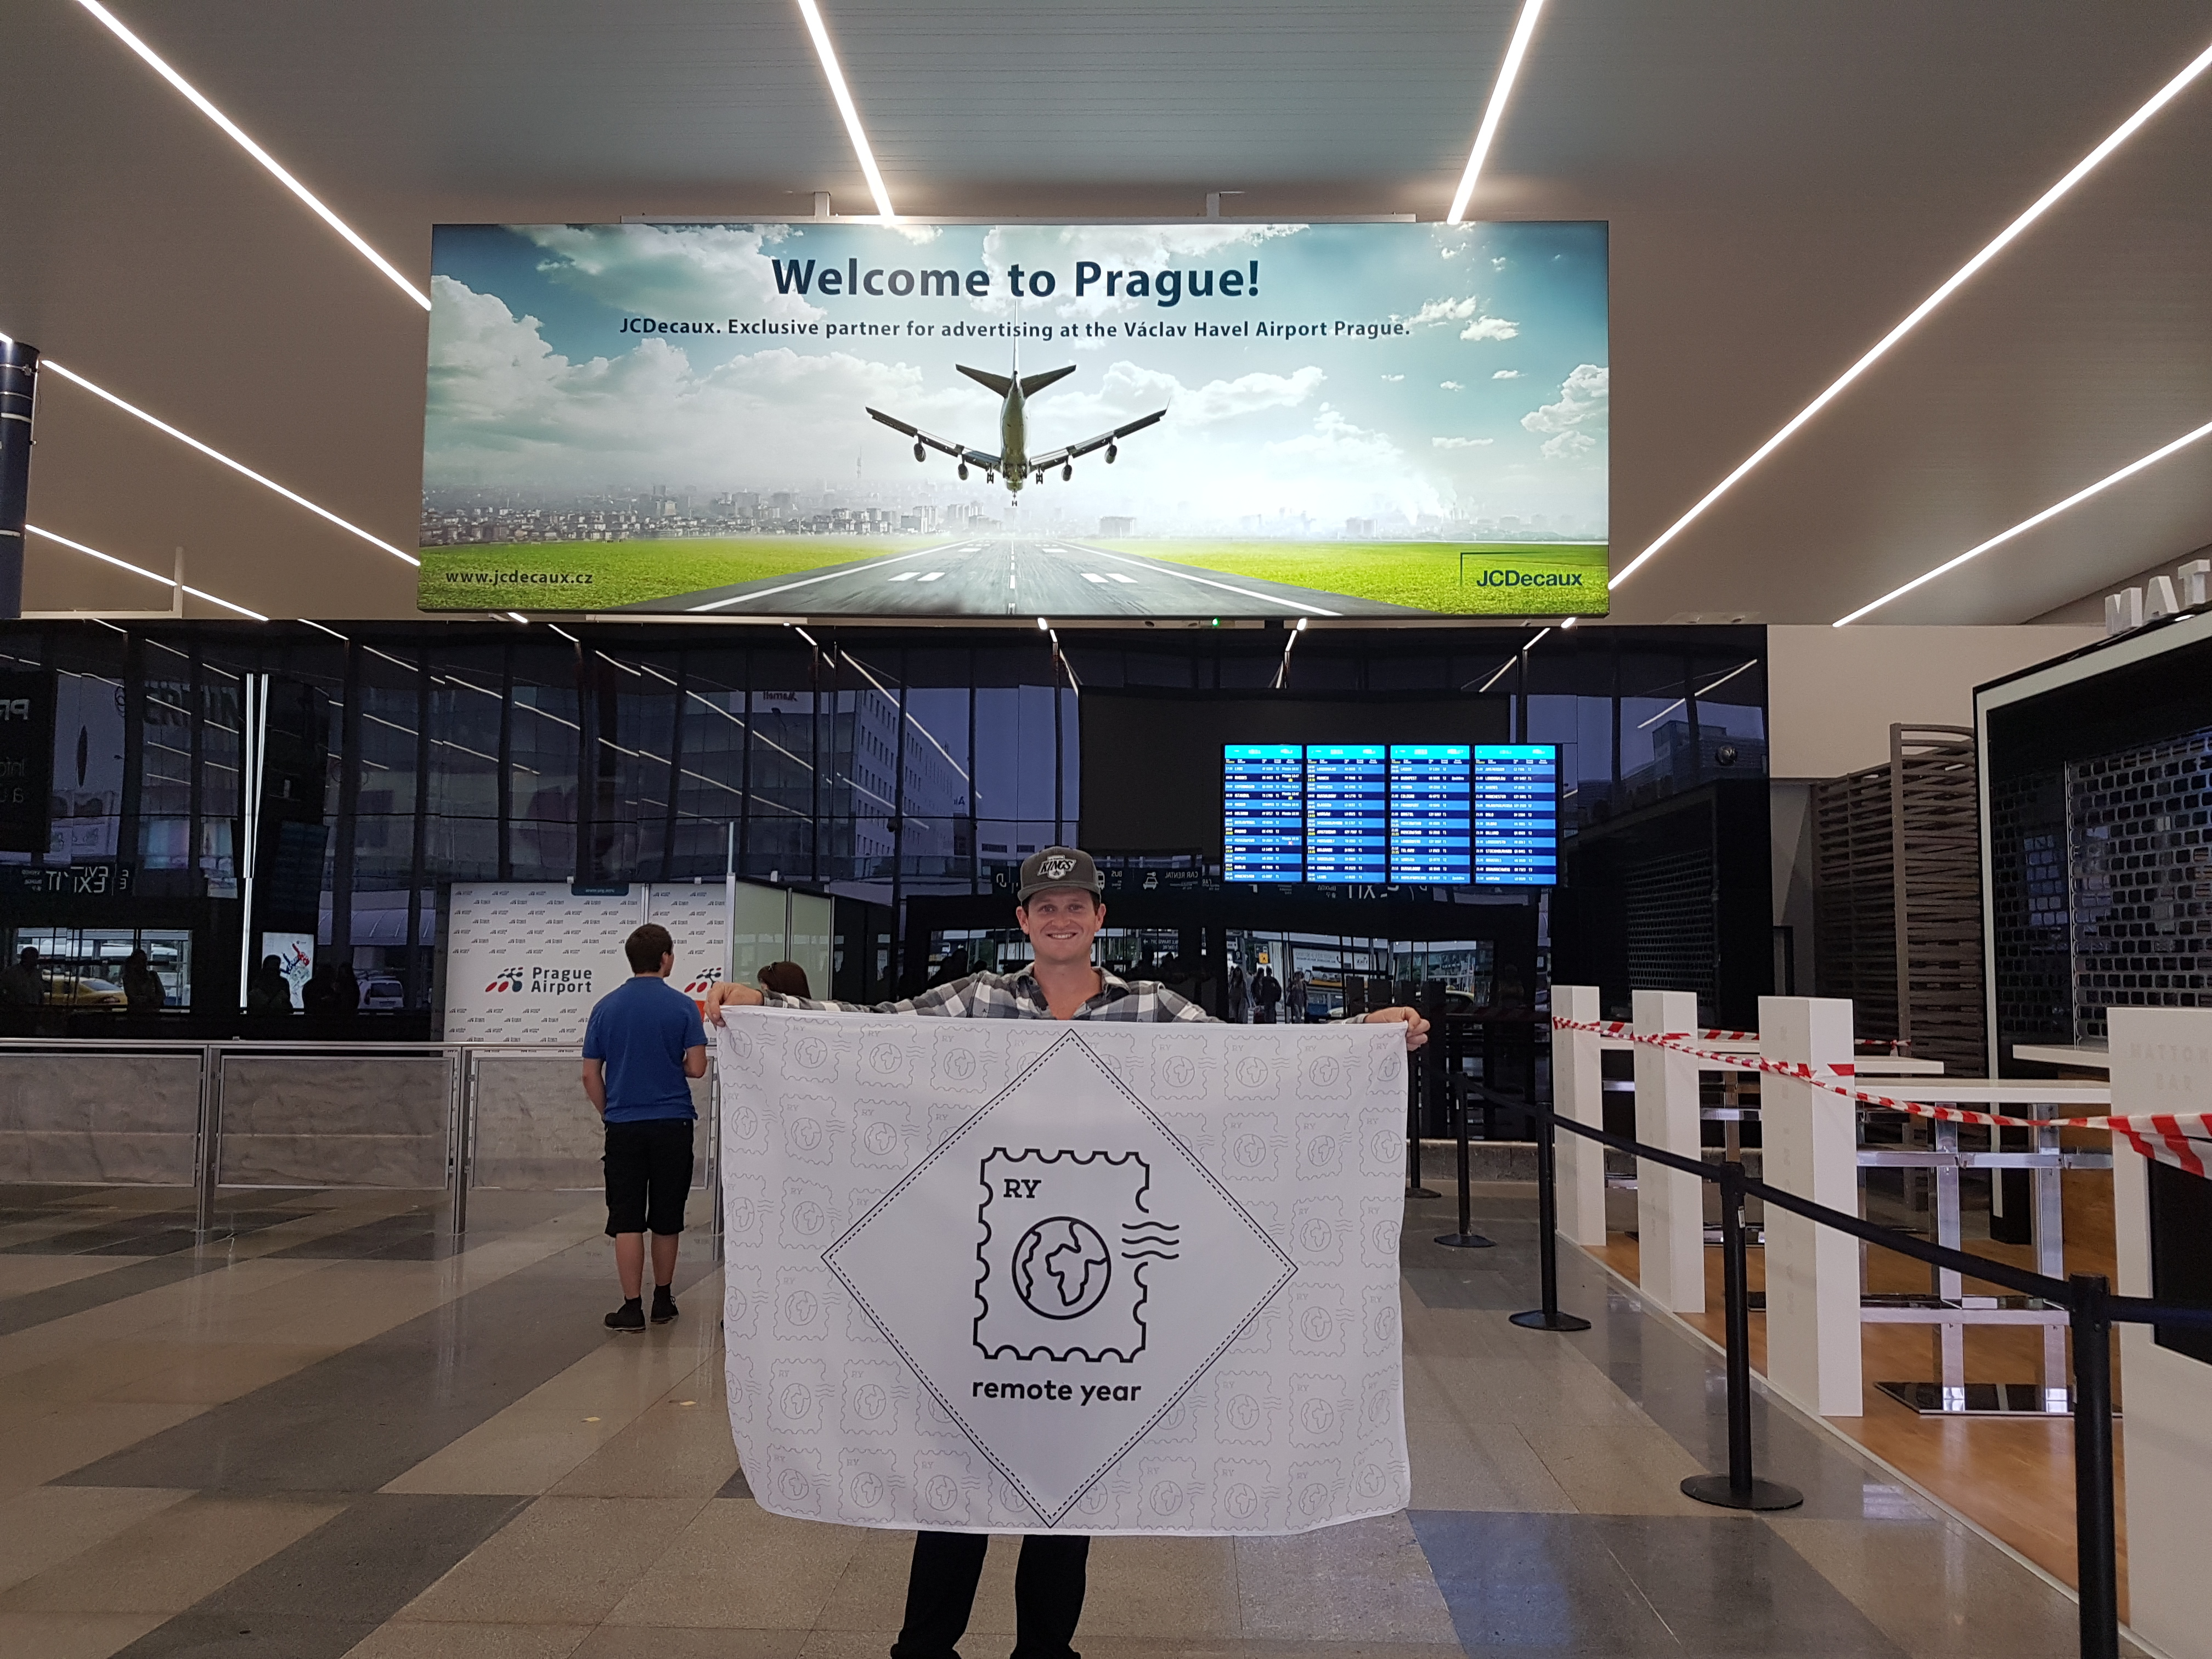 My Arrival in Prague